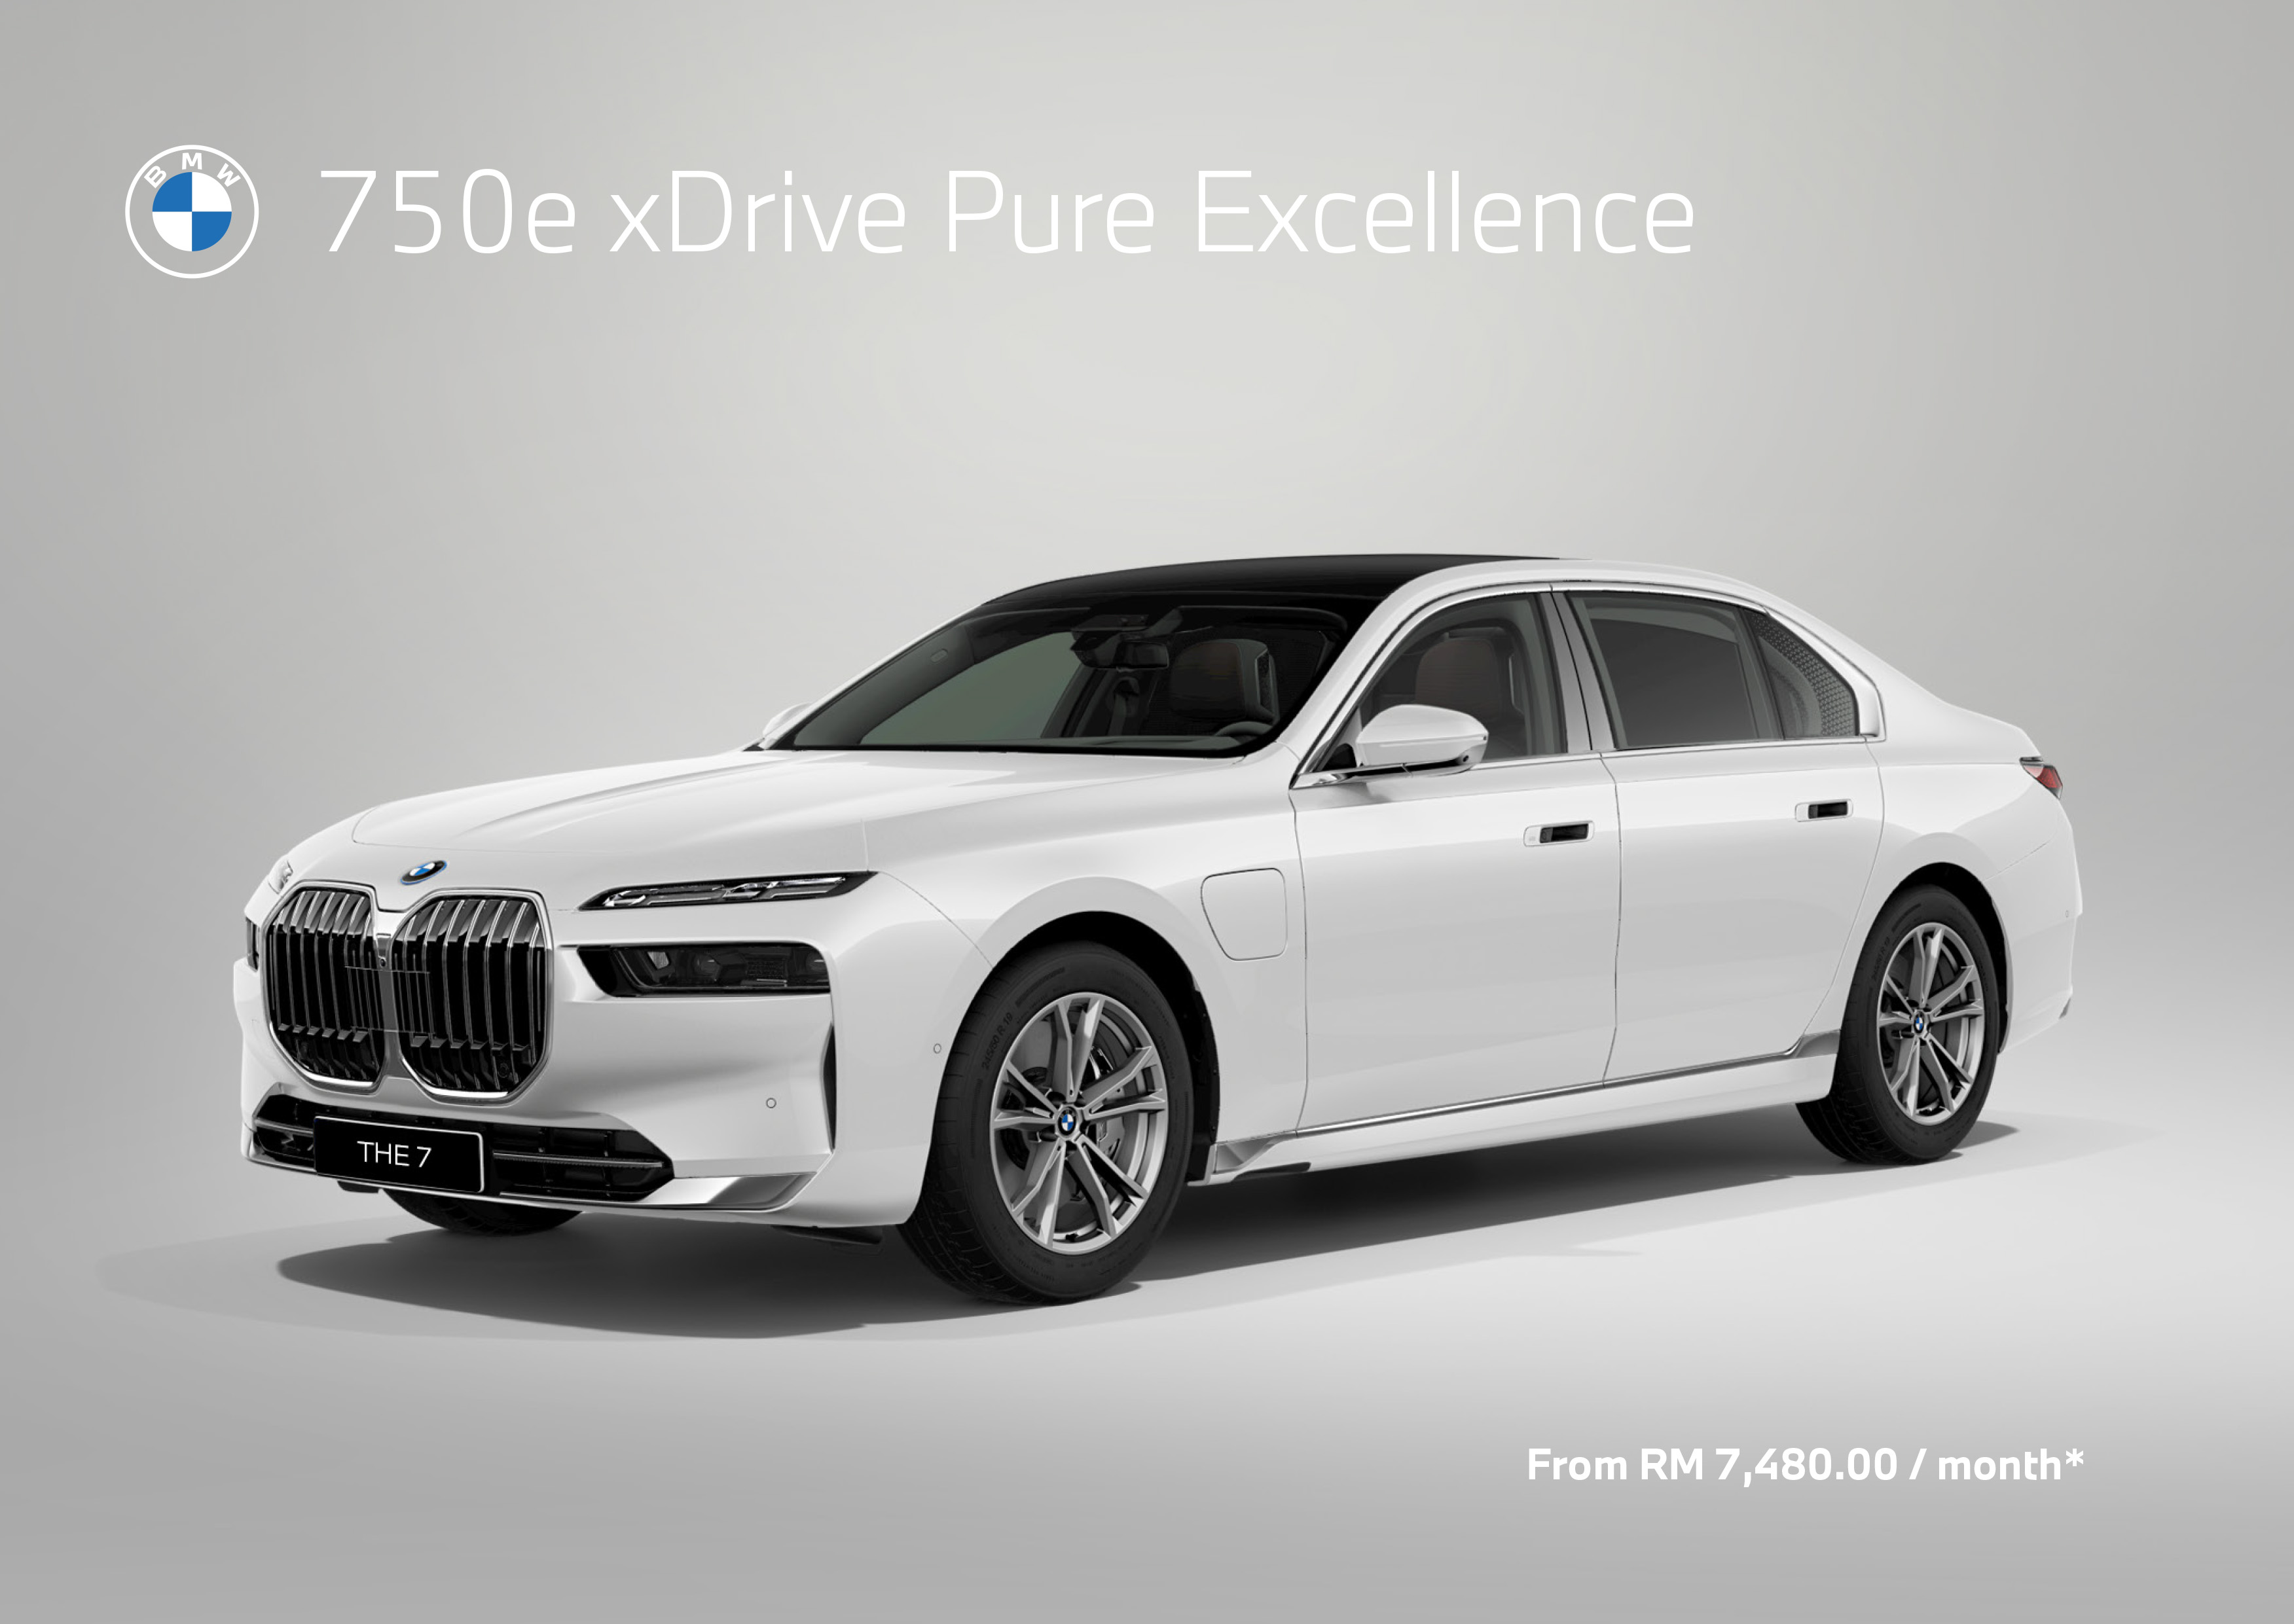 BMW_specs_sheet_750e xDrive Pure Excellence_PM_01